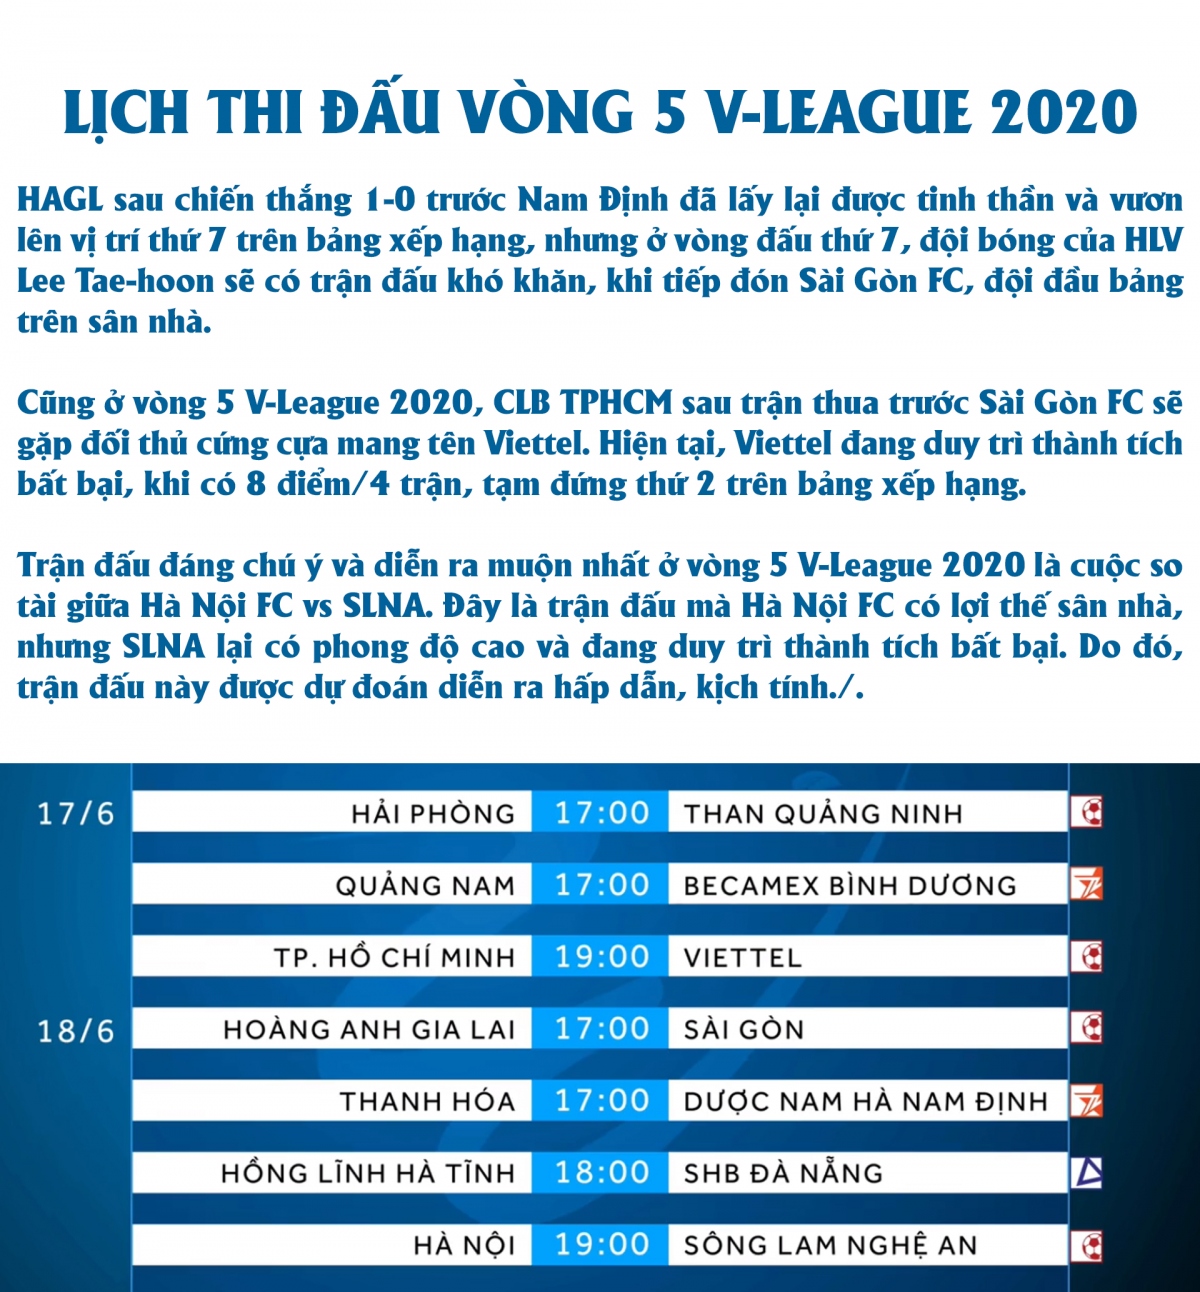 lich_thi_dau_vong_5_v-league_2020_vov.jpg